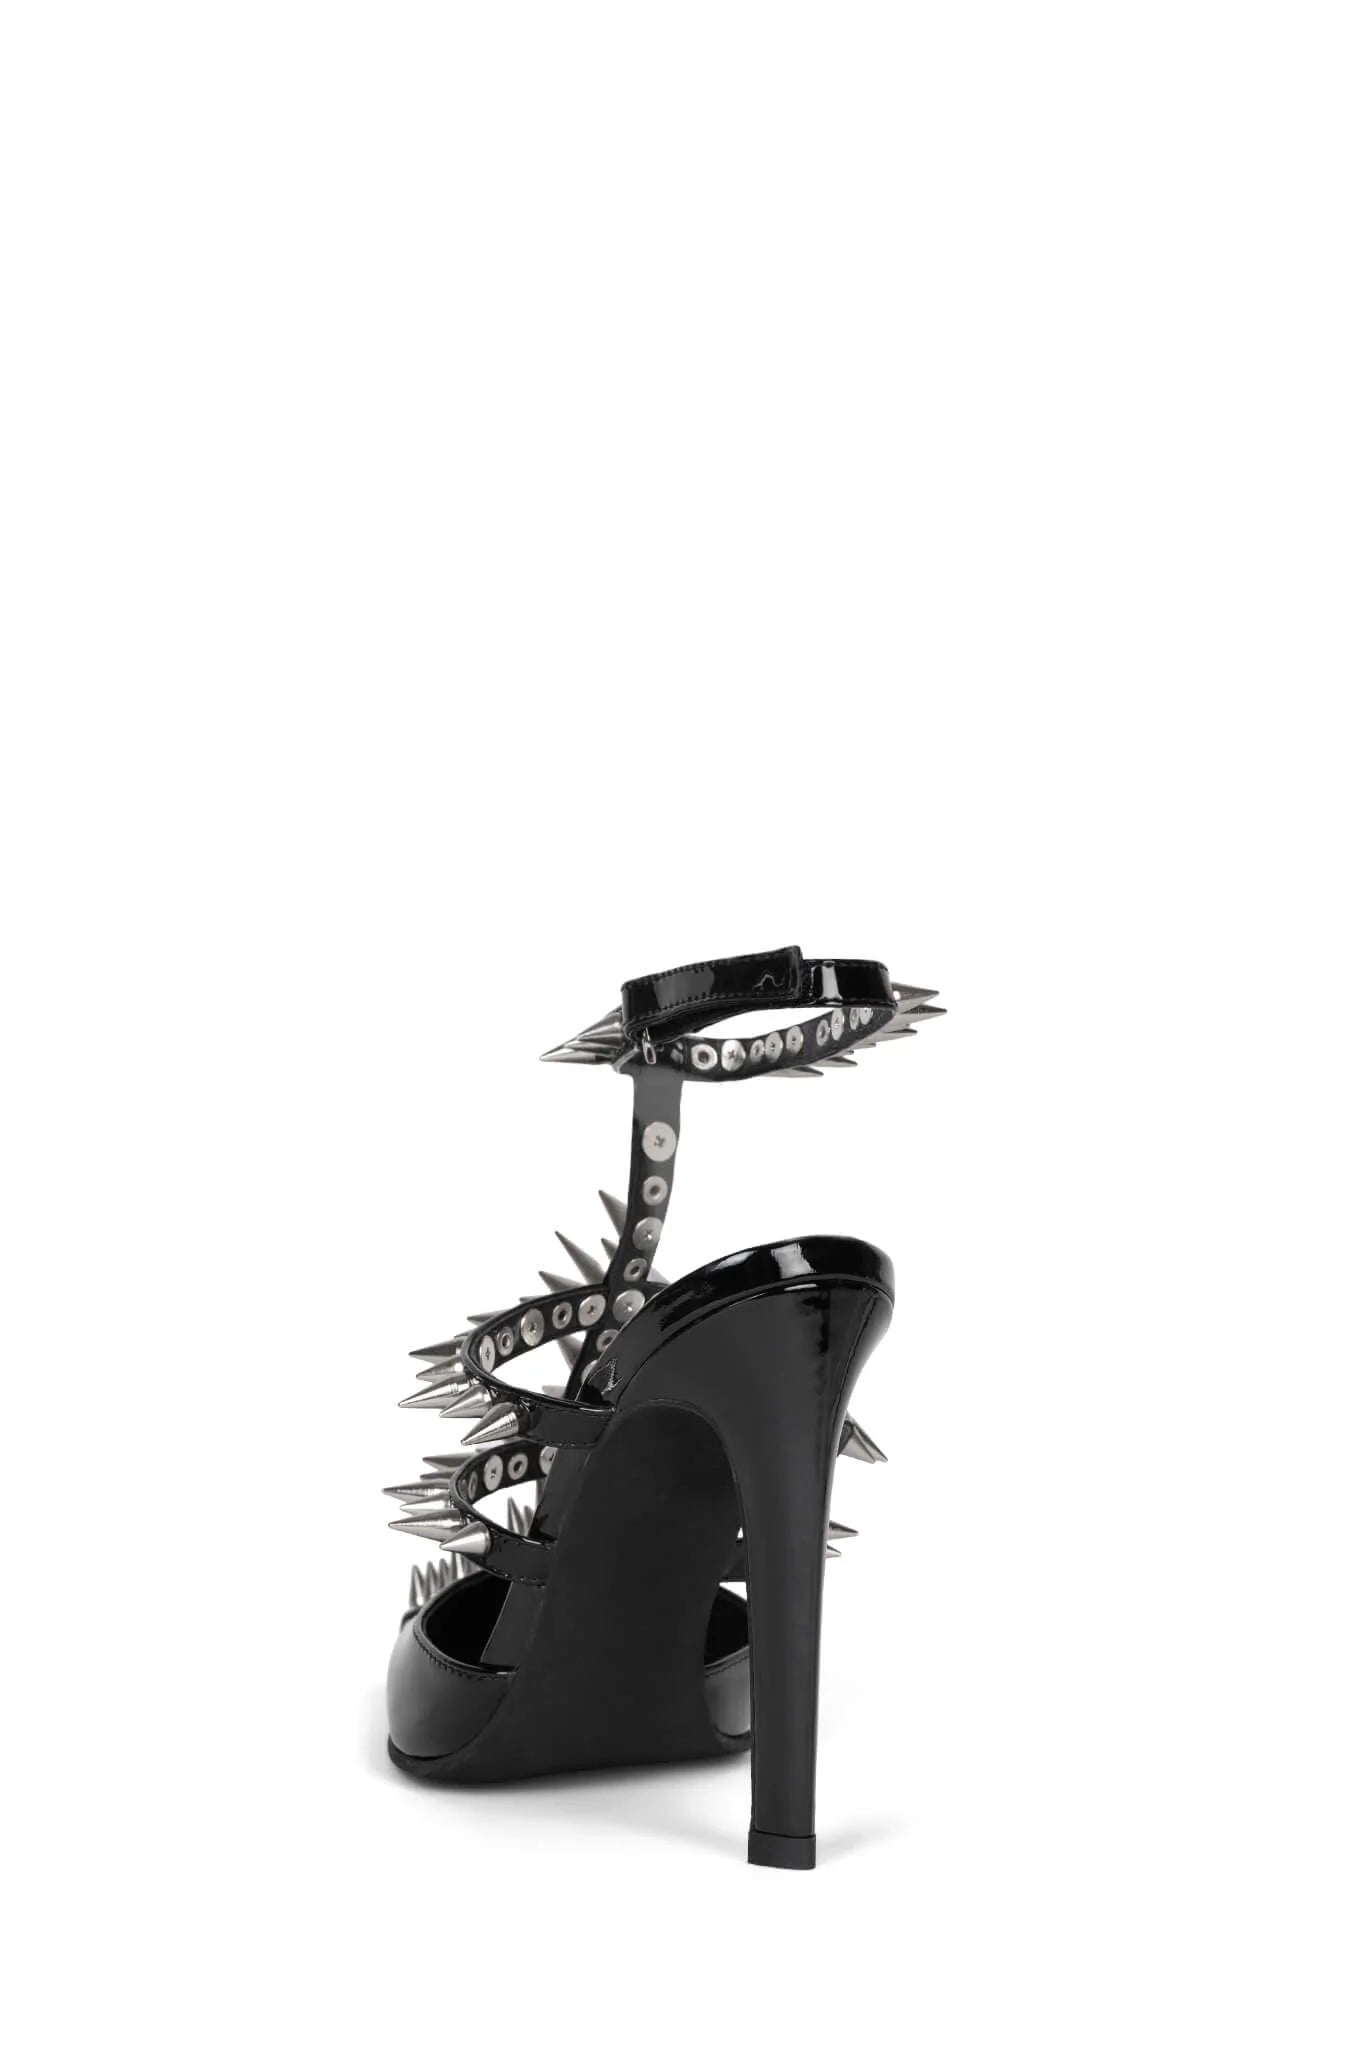 Step Back Heels - Patent Black/Silver